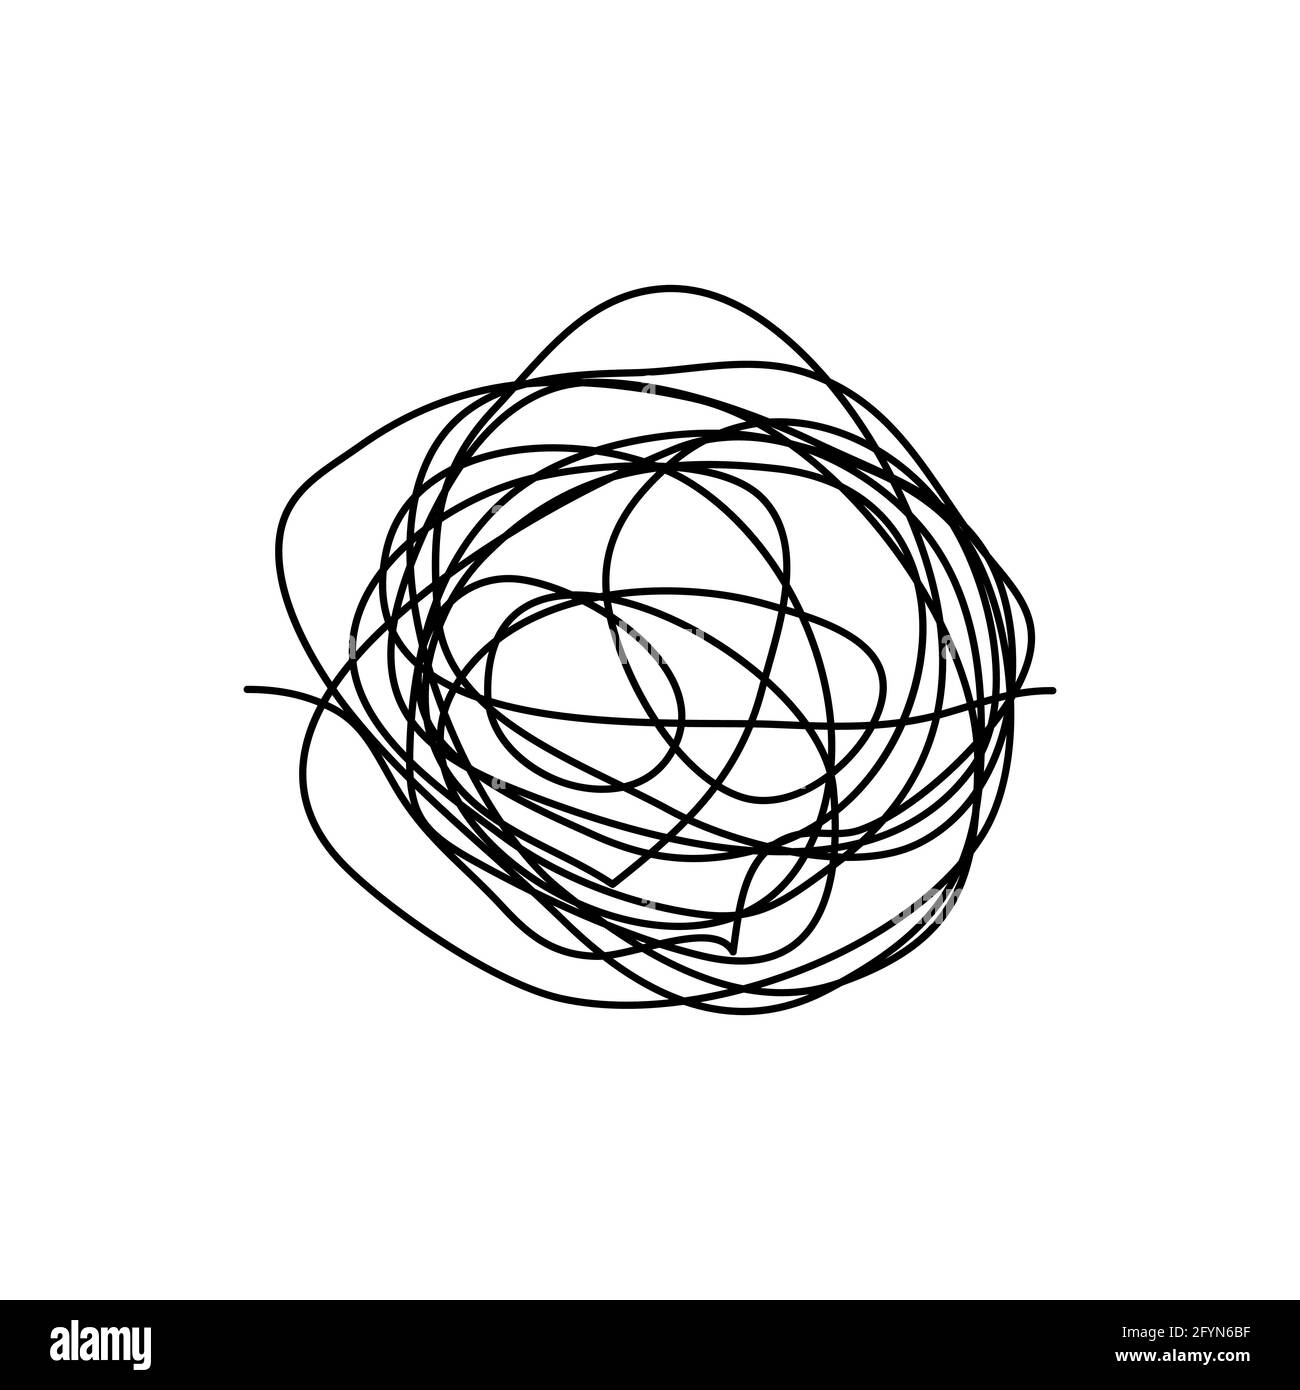 Hand drawn scrawl symbol. Chaotic doodle line sketch circle. Vector illustration Stock Vector